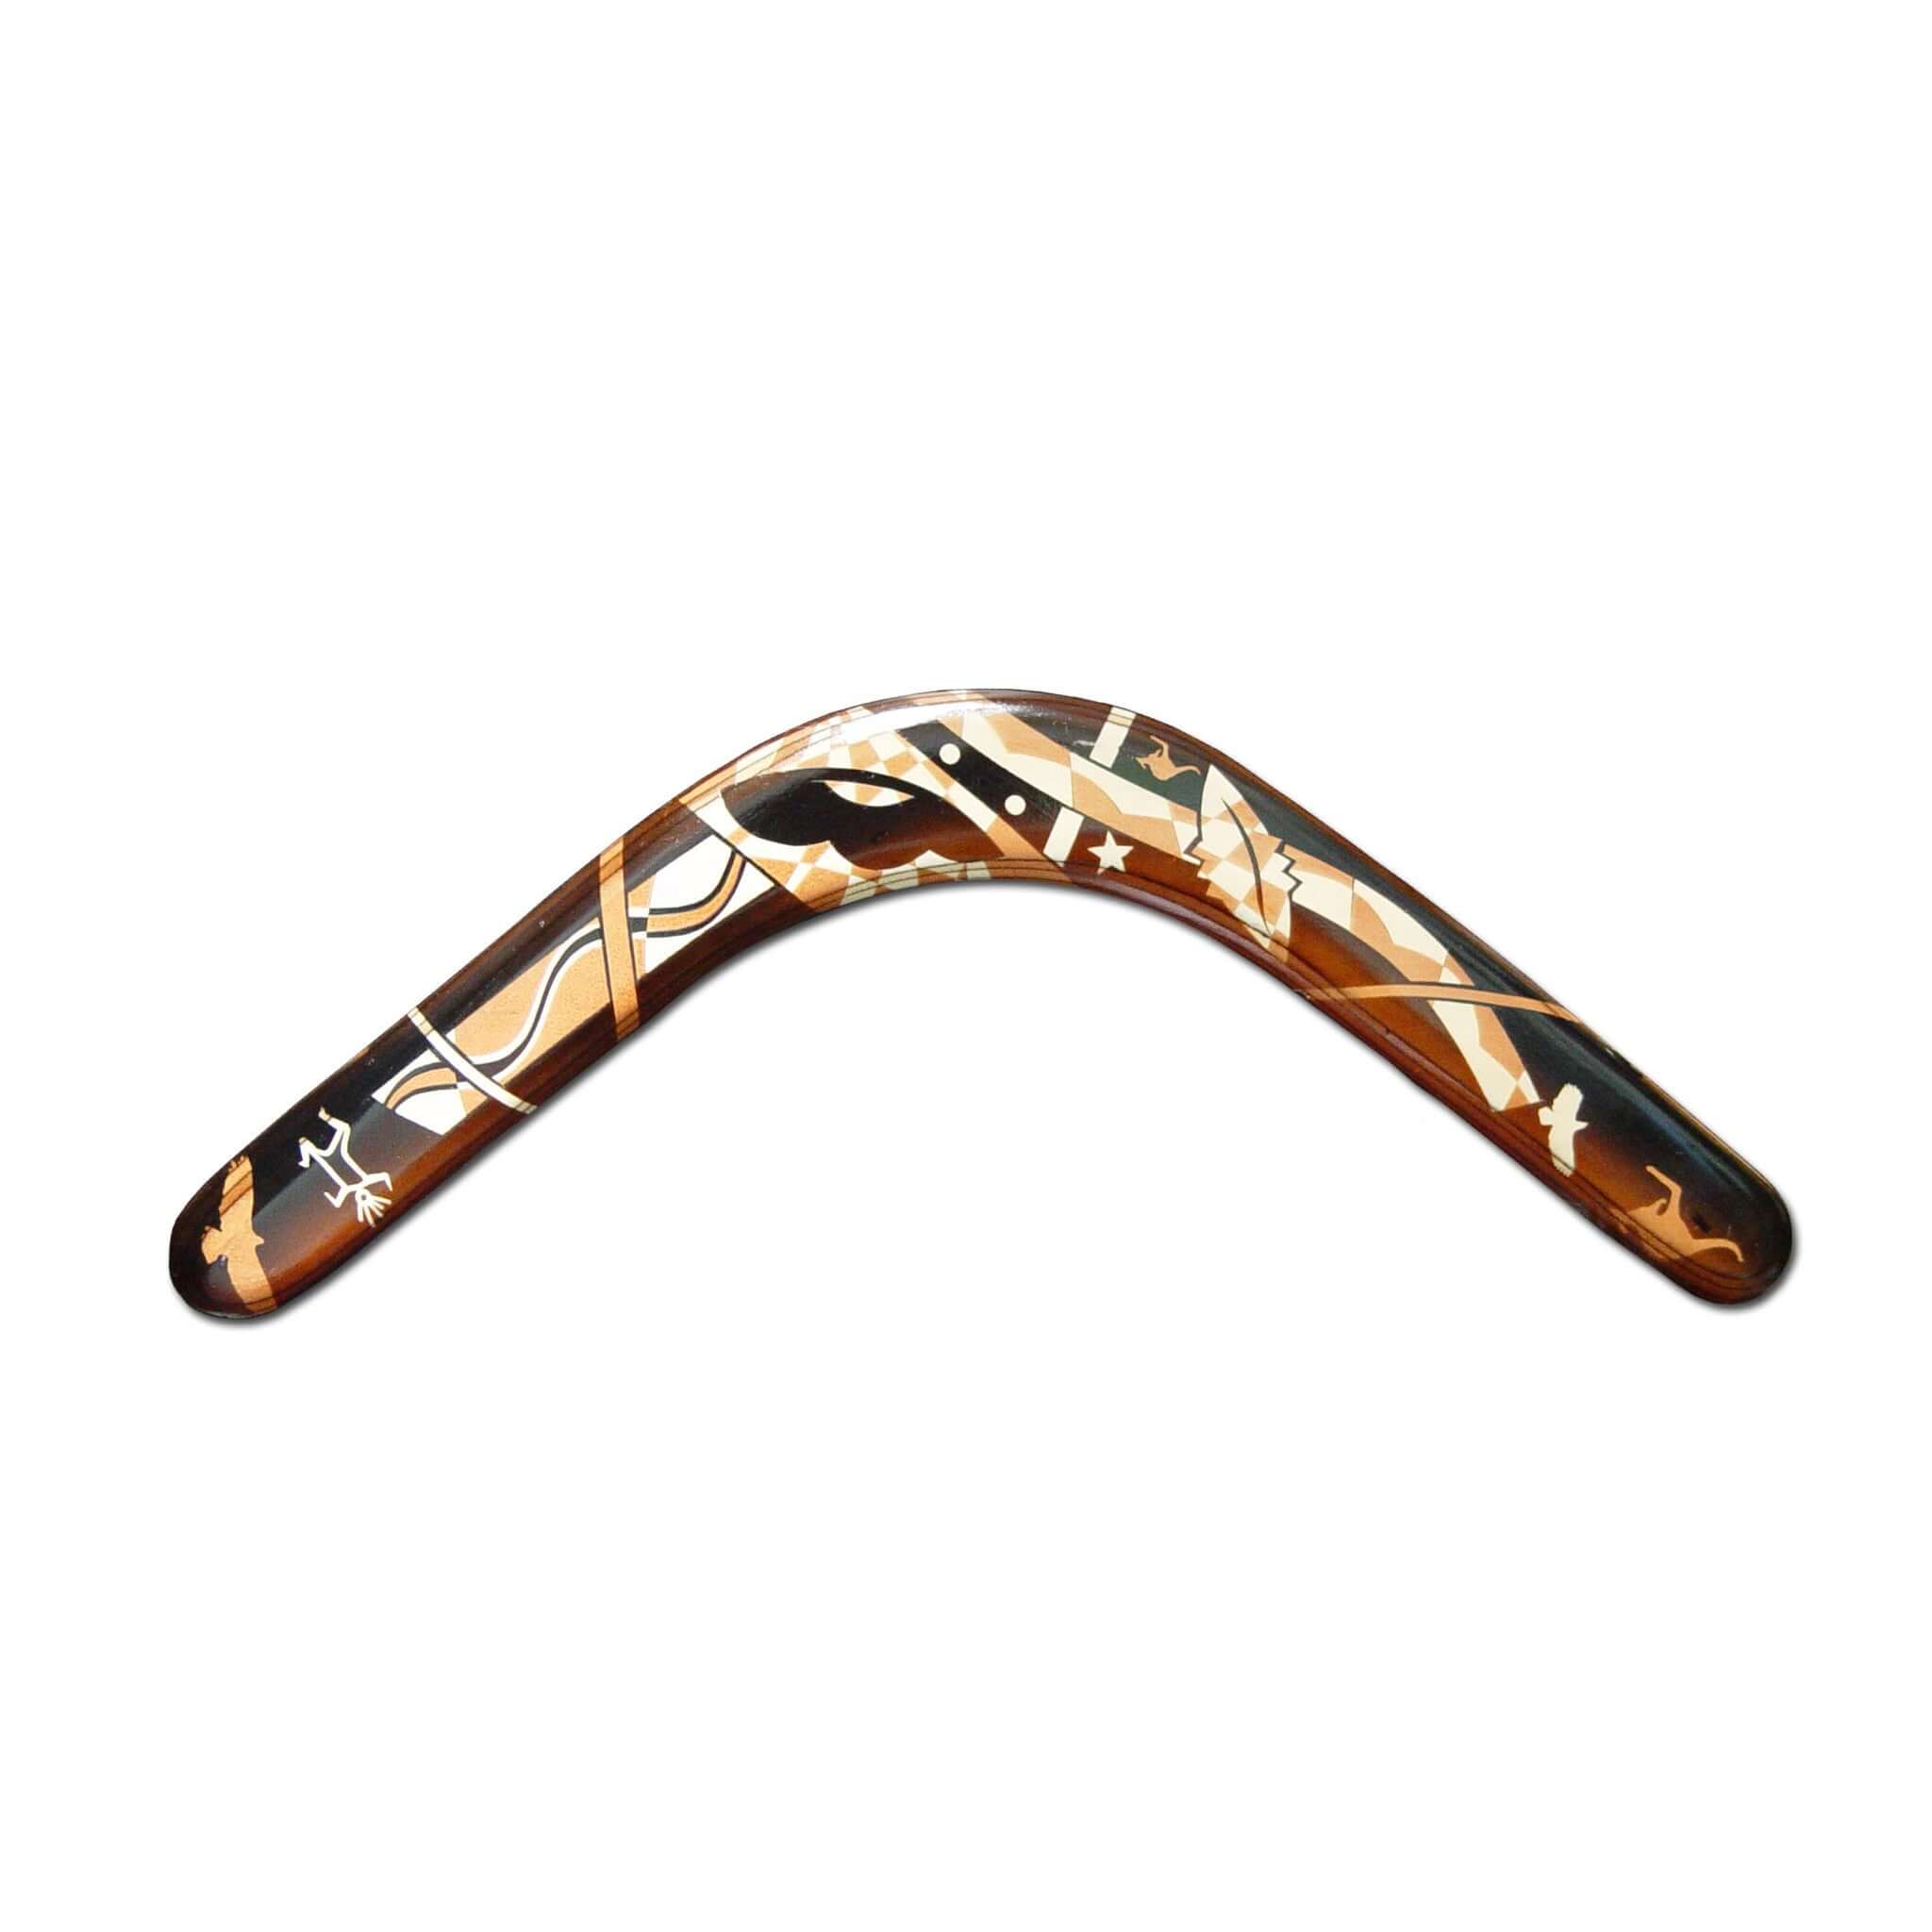 Pelican Aboriginal Boomerang RH - boomerangs-com